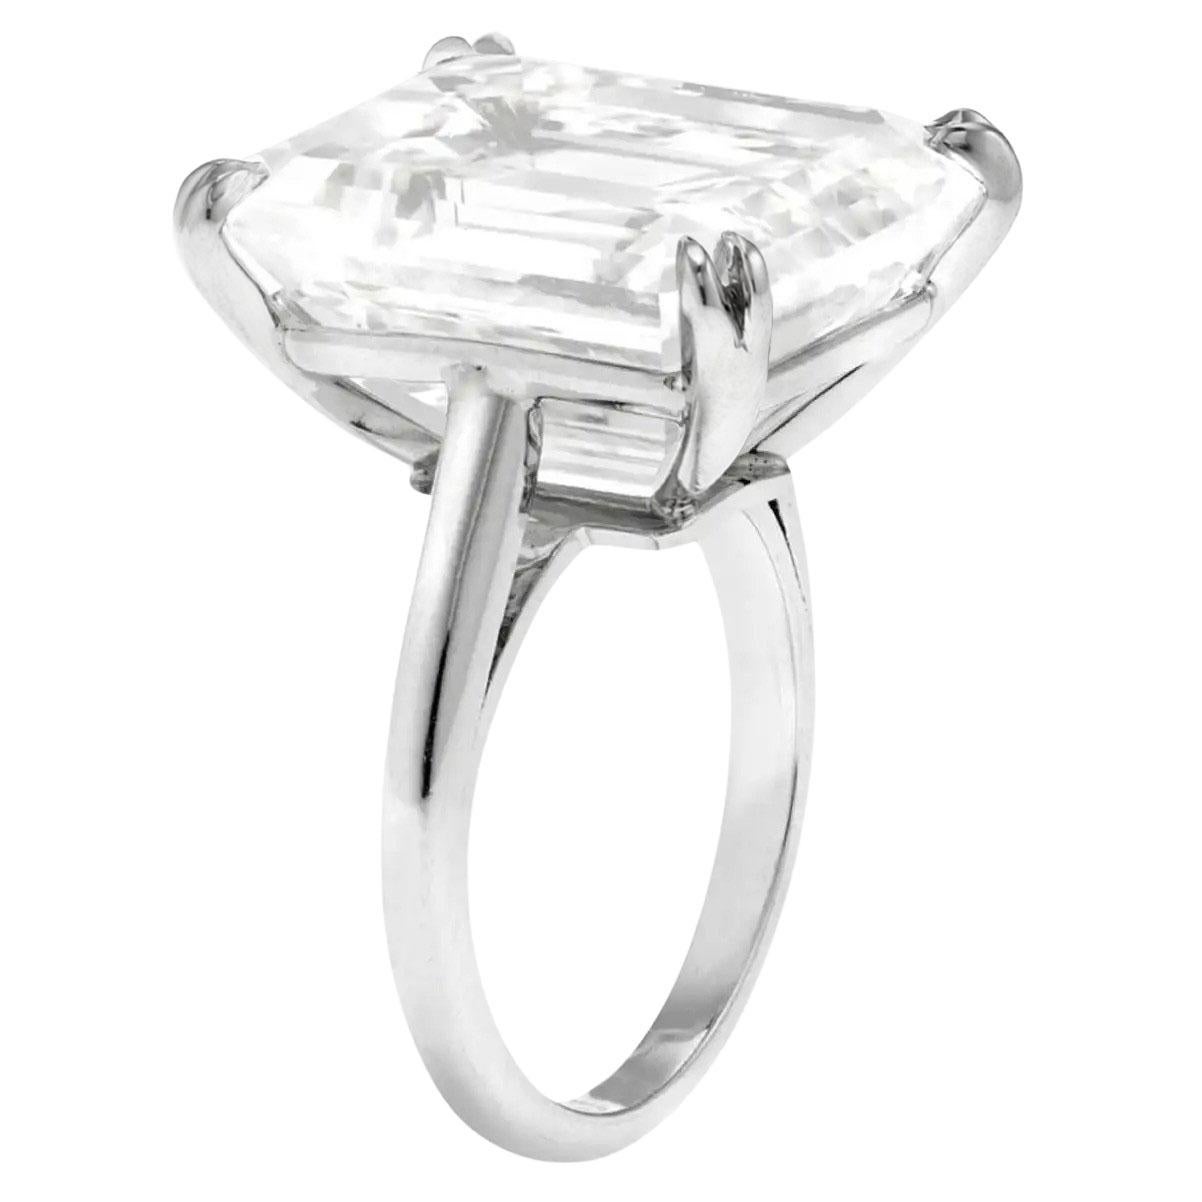 
GIA Certified 10 Carat Emerald Cut Diamond Platinum Ring

